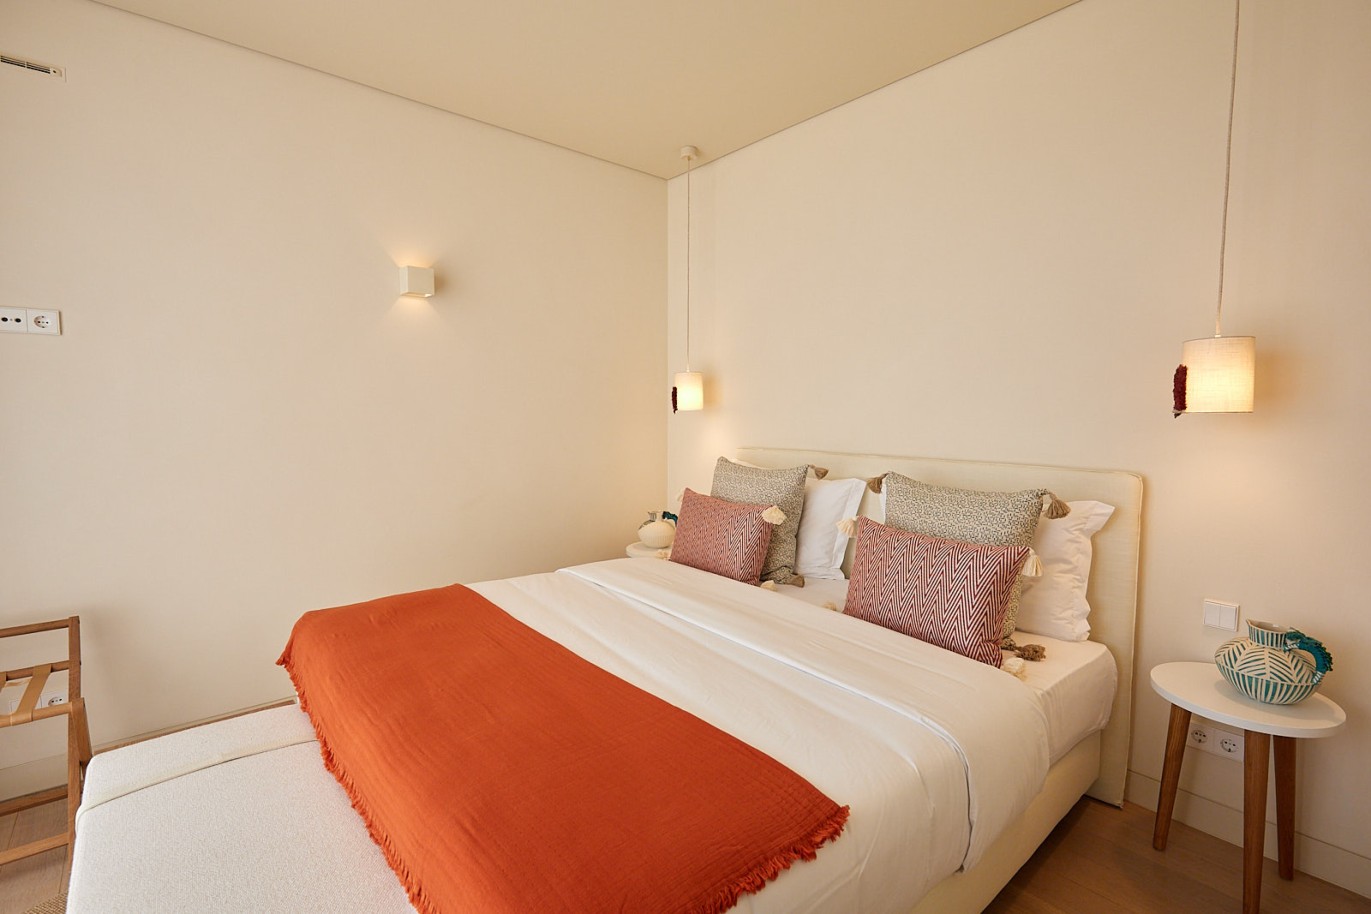 2 bedroom apartment in resort, for sale in Porches, Algarve_228888